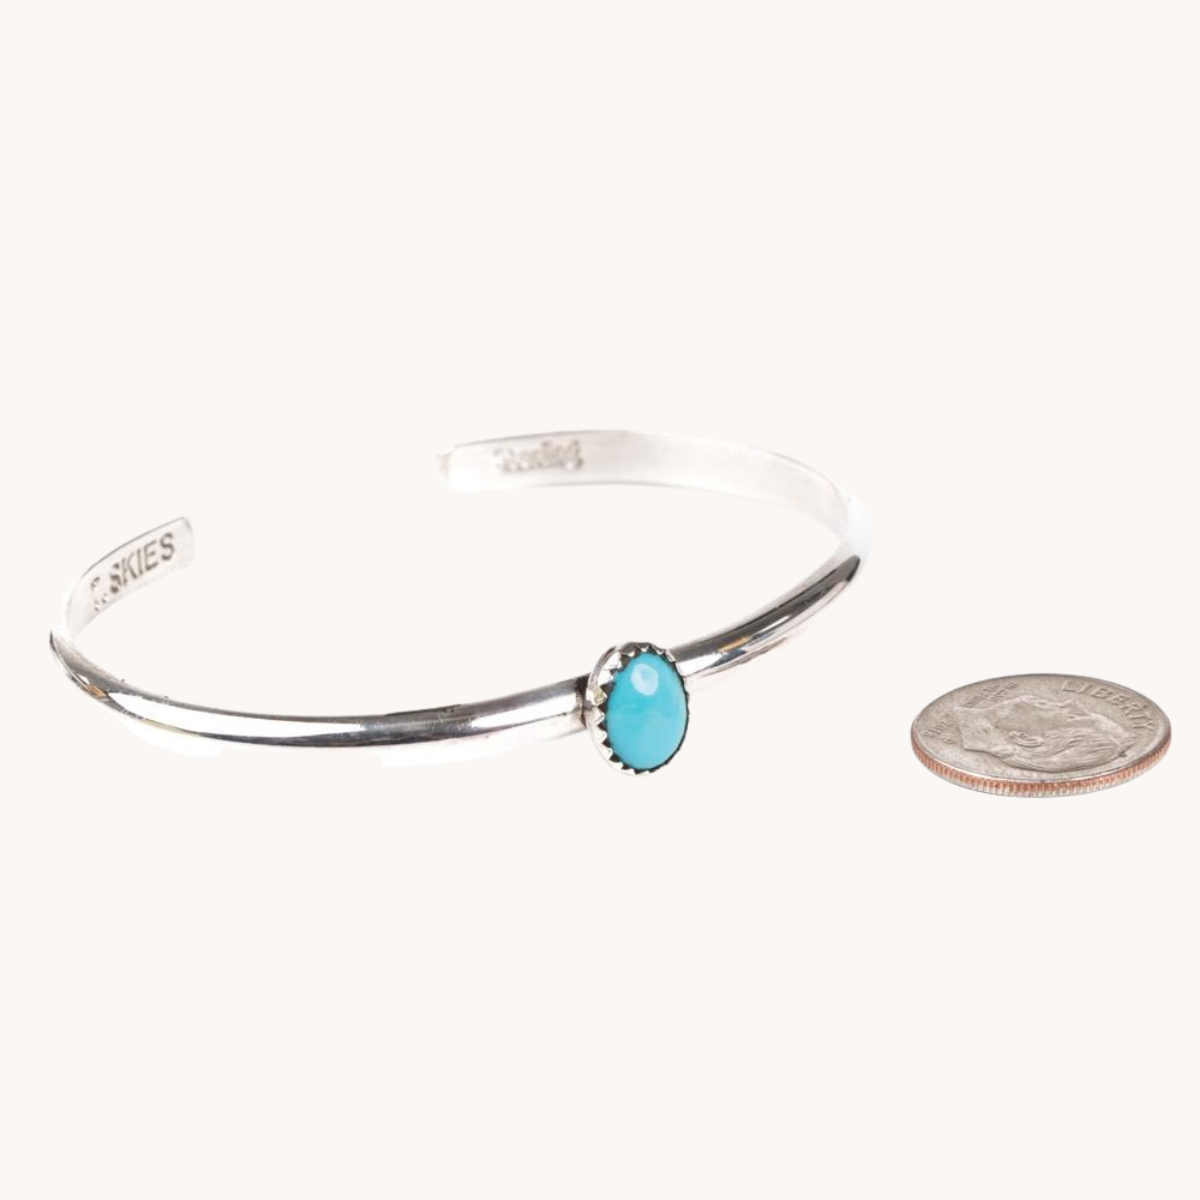 Turquoise Stone Silver Bracelet by TSkies